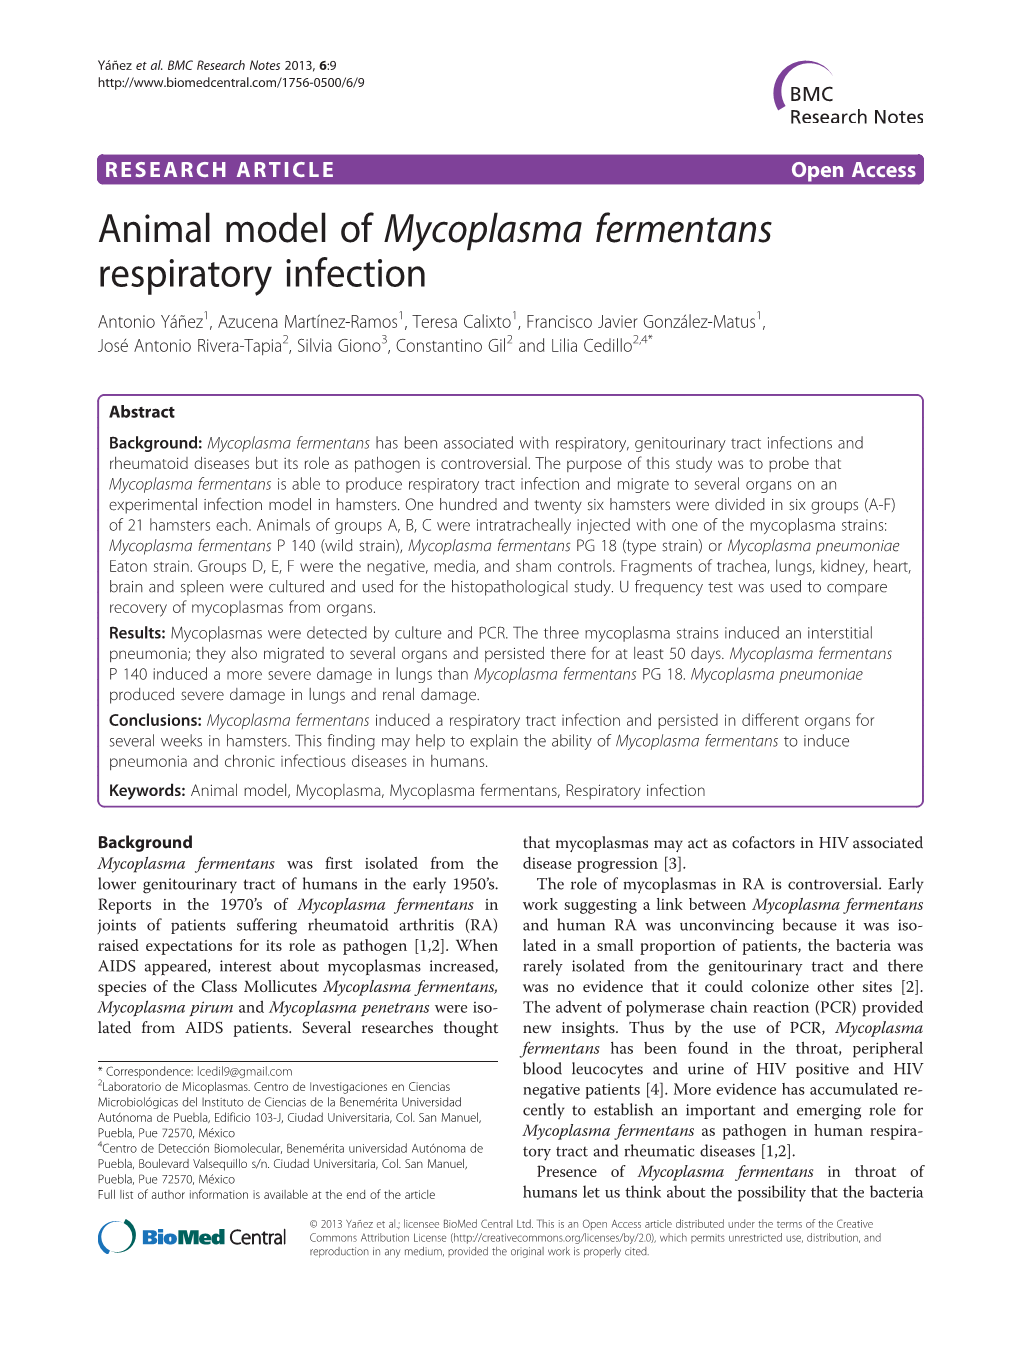 Animal Model of Mycoplasma Fermentans Respiratory Infection